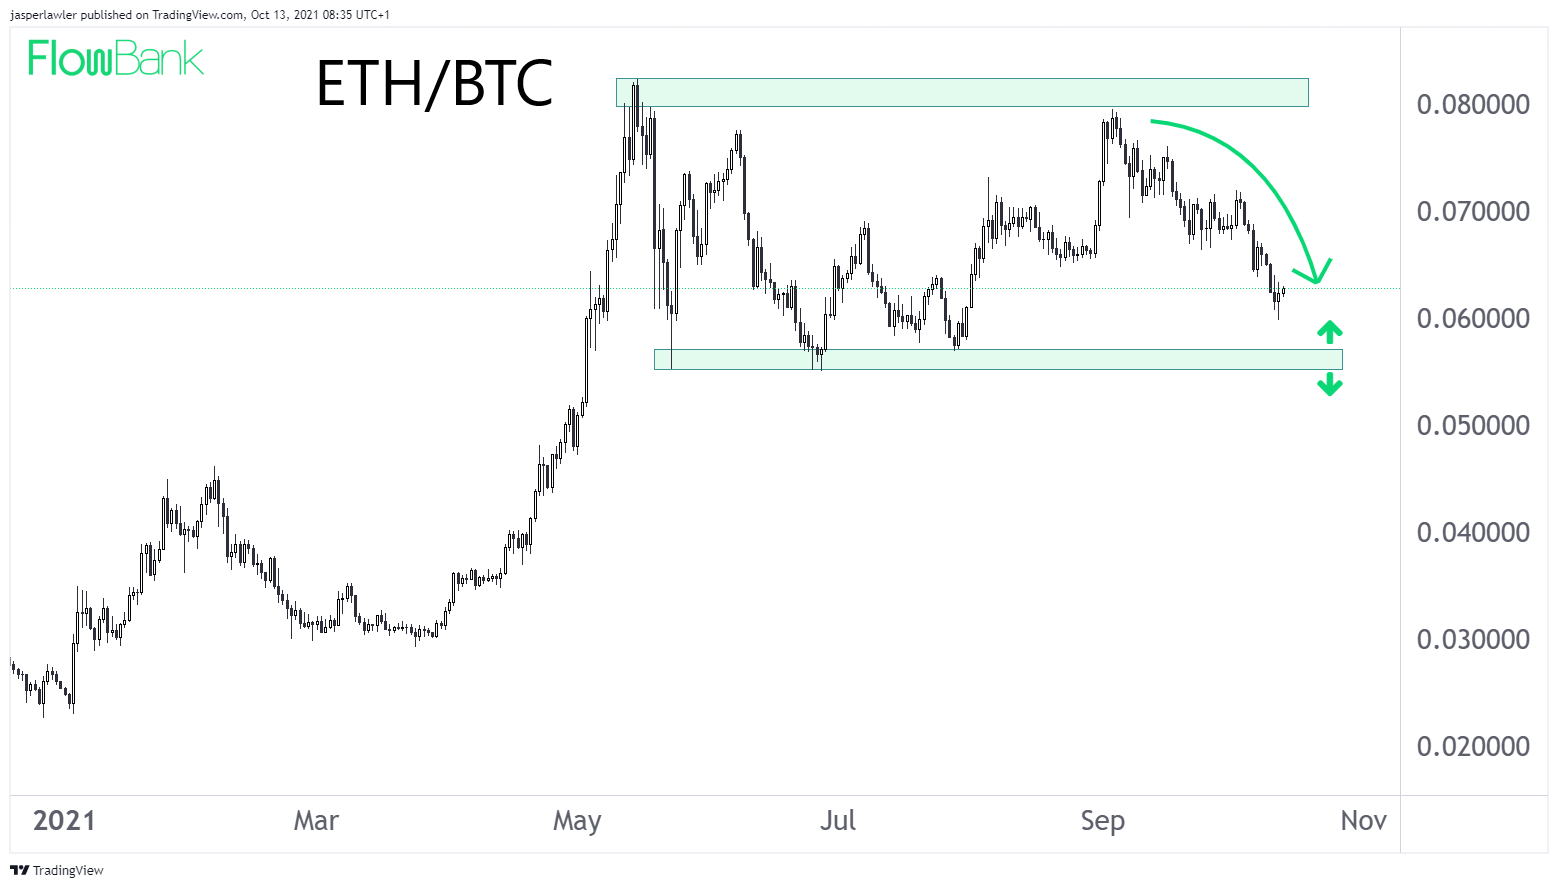 ETH/BTC price chart 1 year